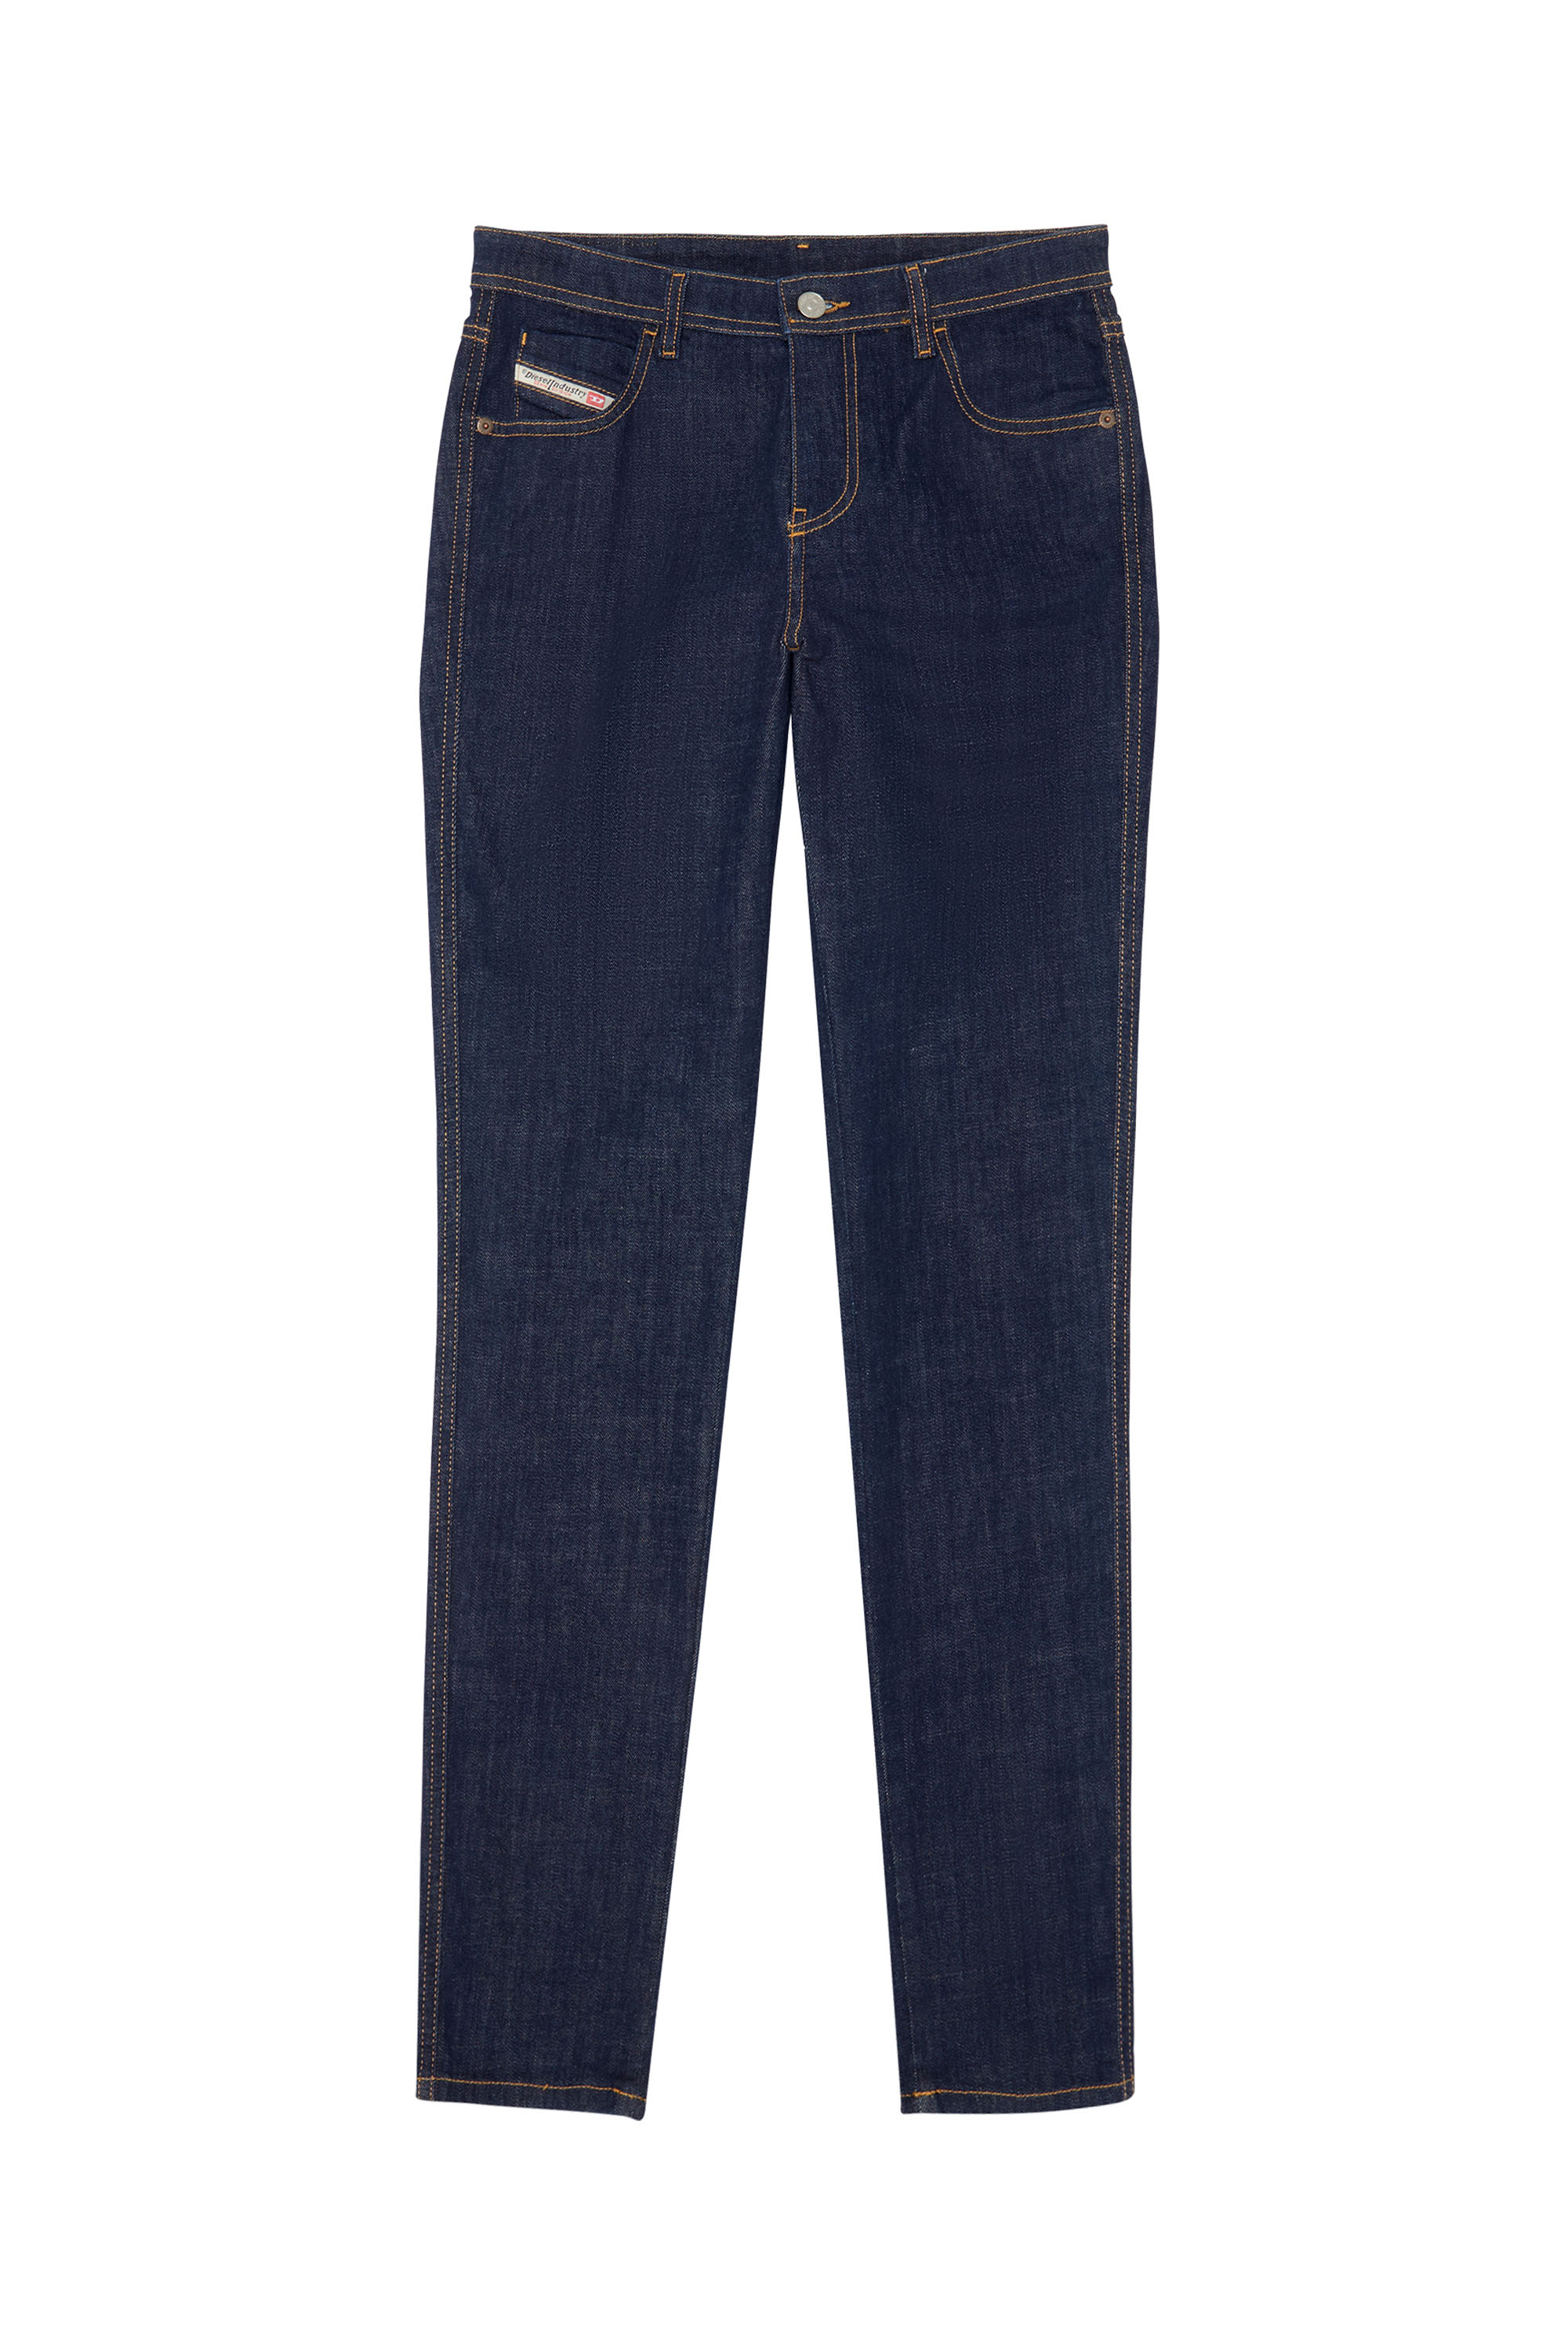 2015 BABHILA Z9C17 Skinny Jeans, Bleu Foncé - Jeans